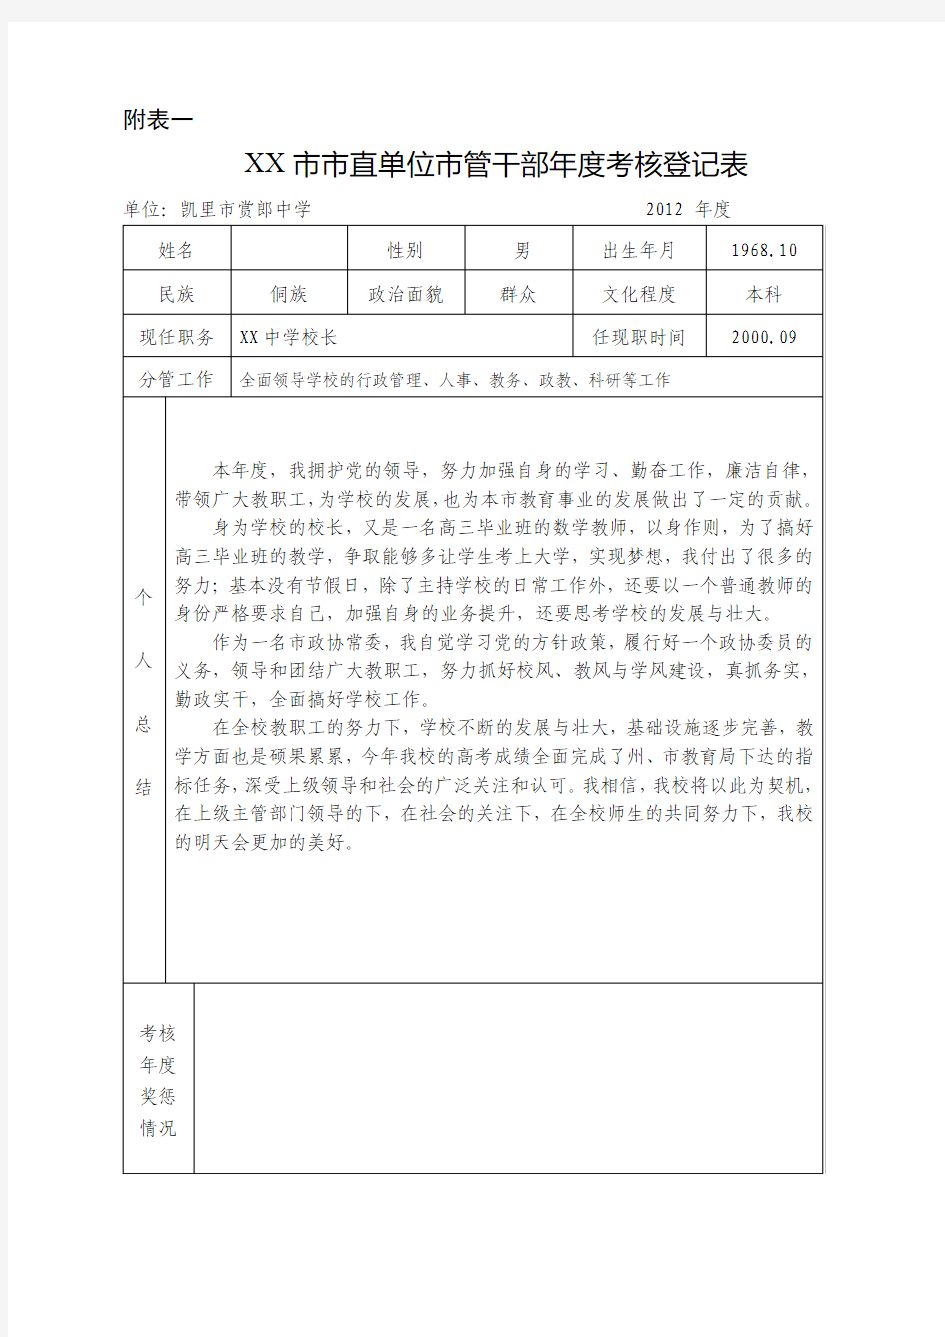 XX校长年度考核登记表(2013)